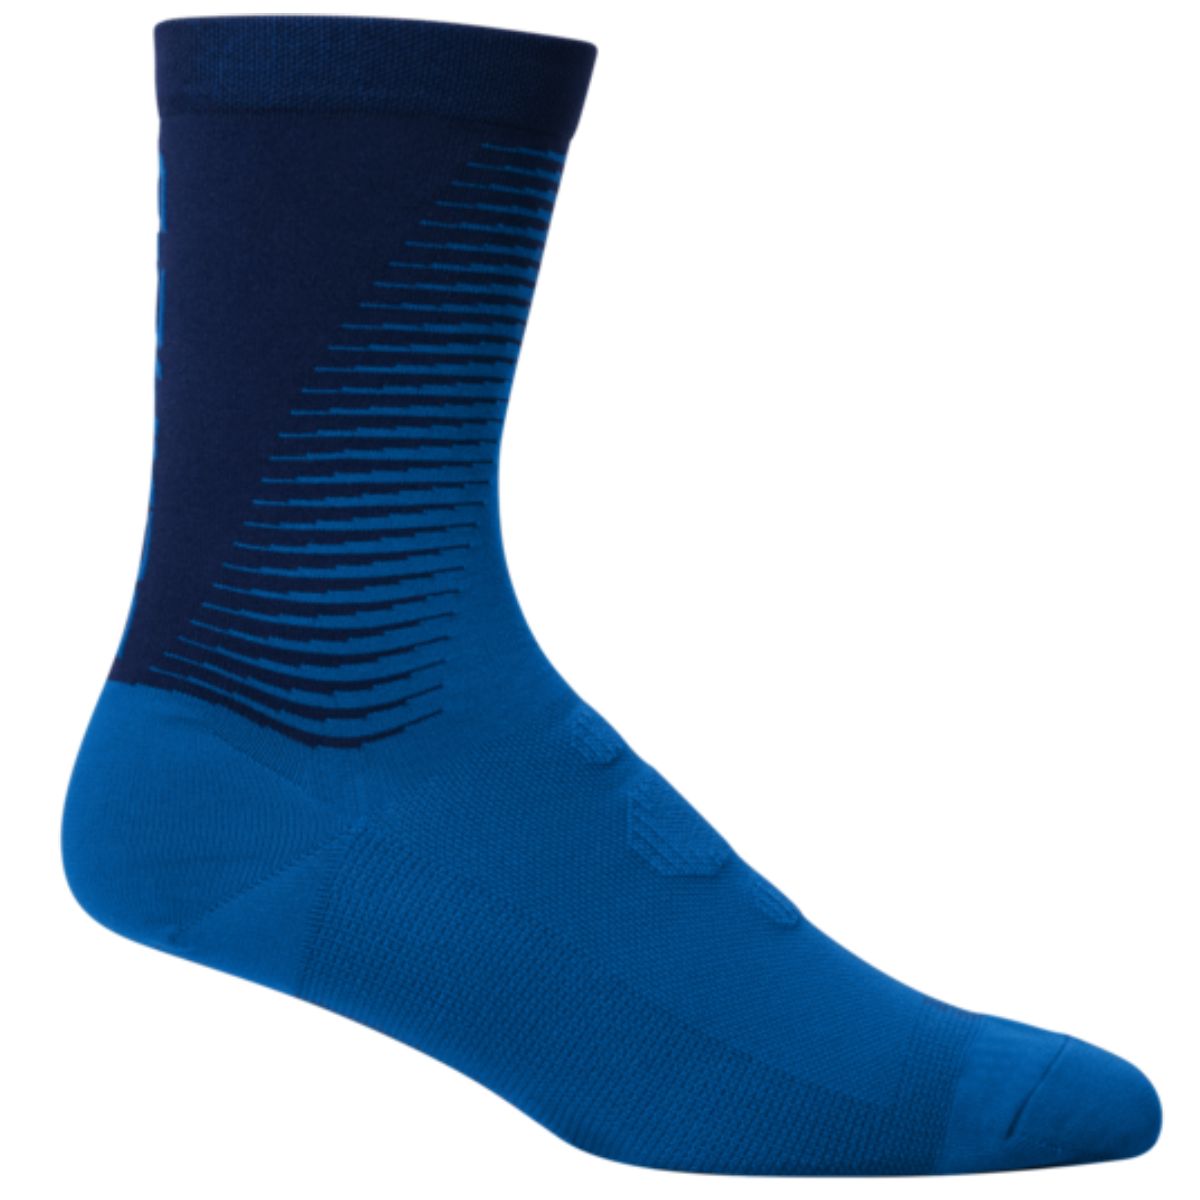 S-Phyre Tall Socks, Blue/Navy, L/XL (Shoe Size 44-48)